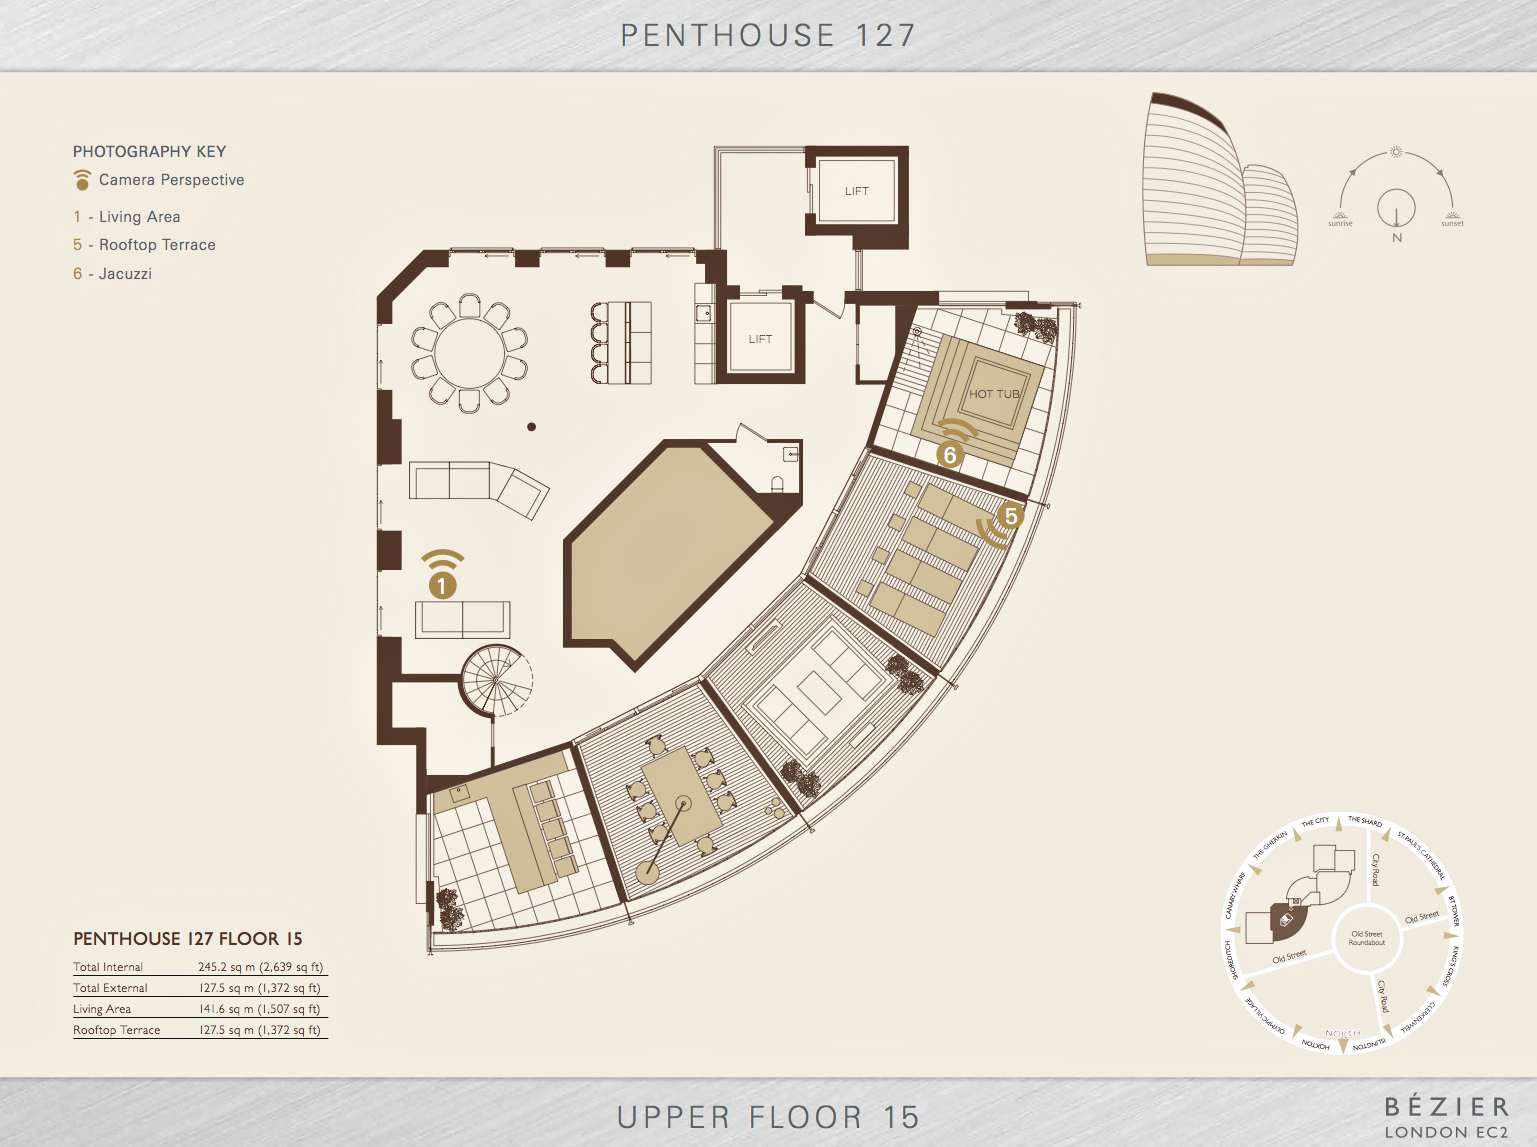 Upper Floor 15 Plan – Penthouse 127 Bezier EC2 – London, England, UK